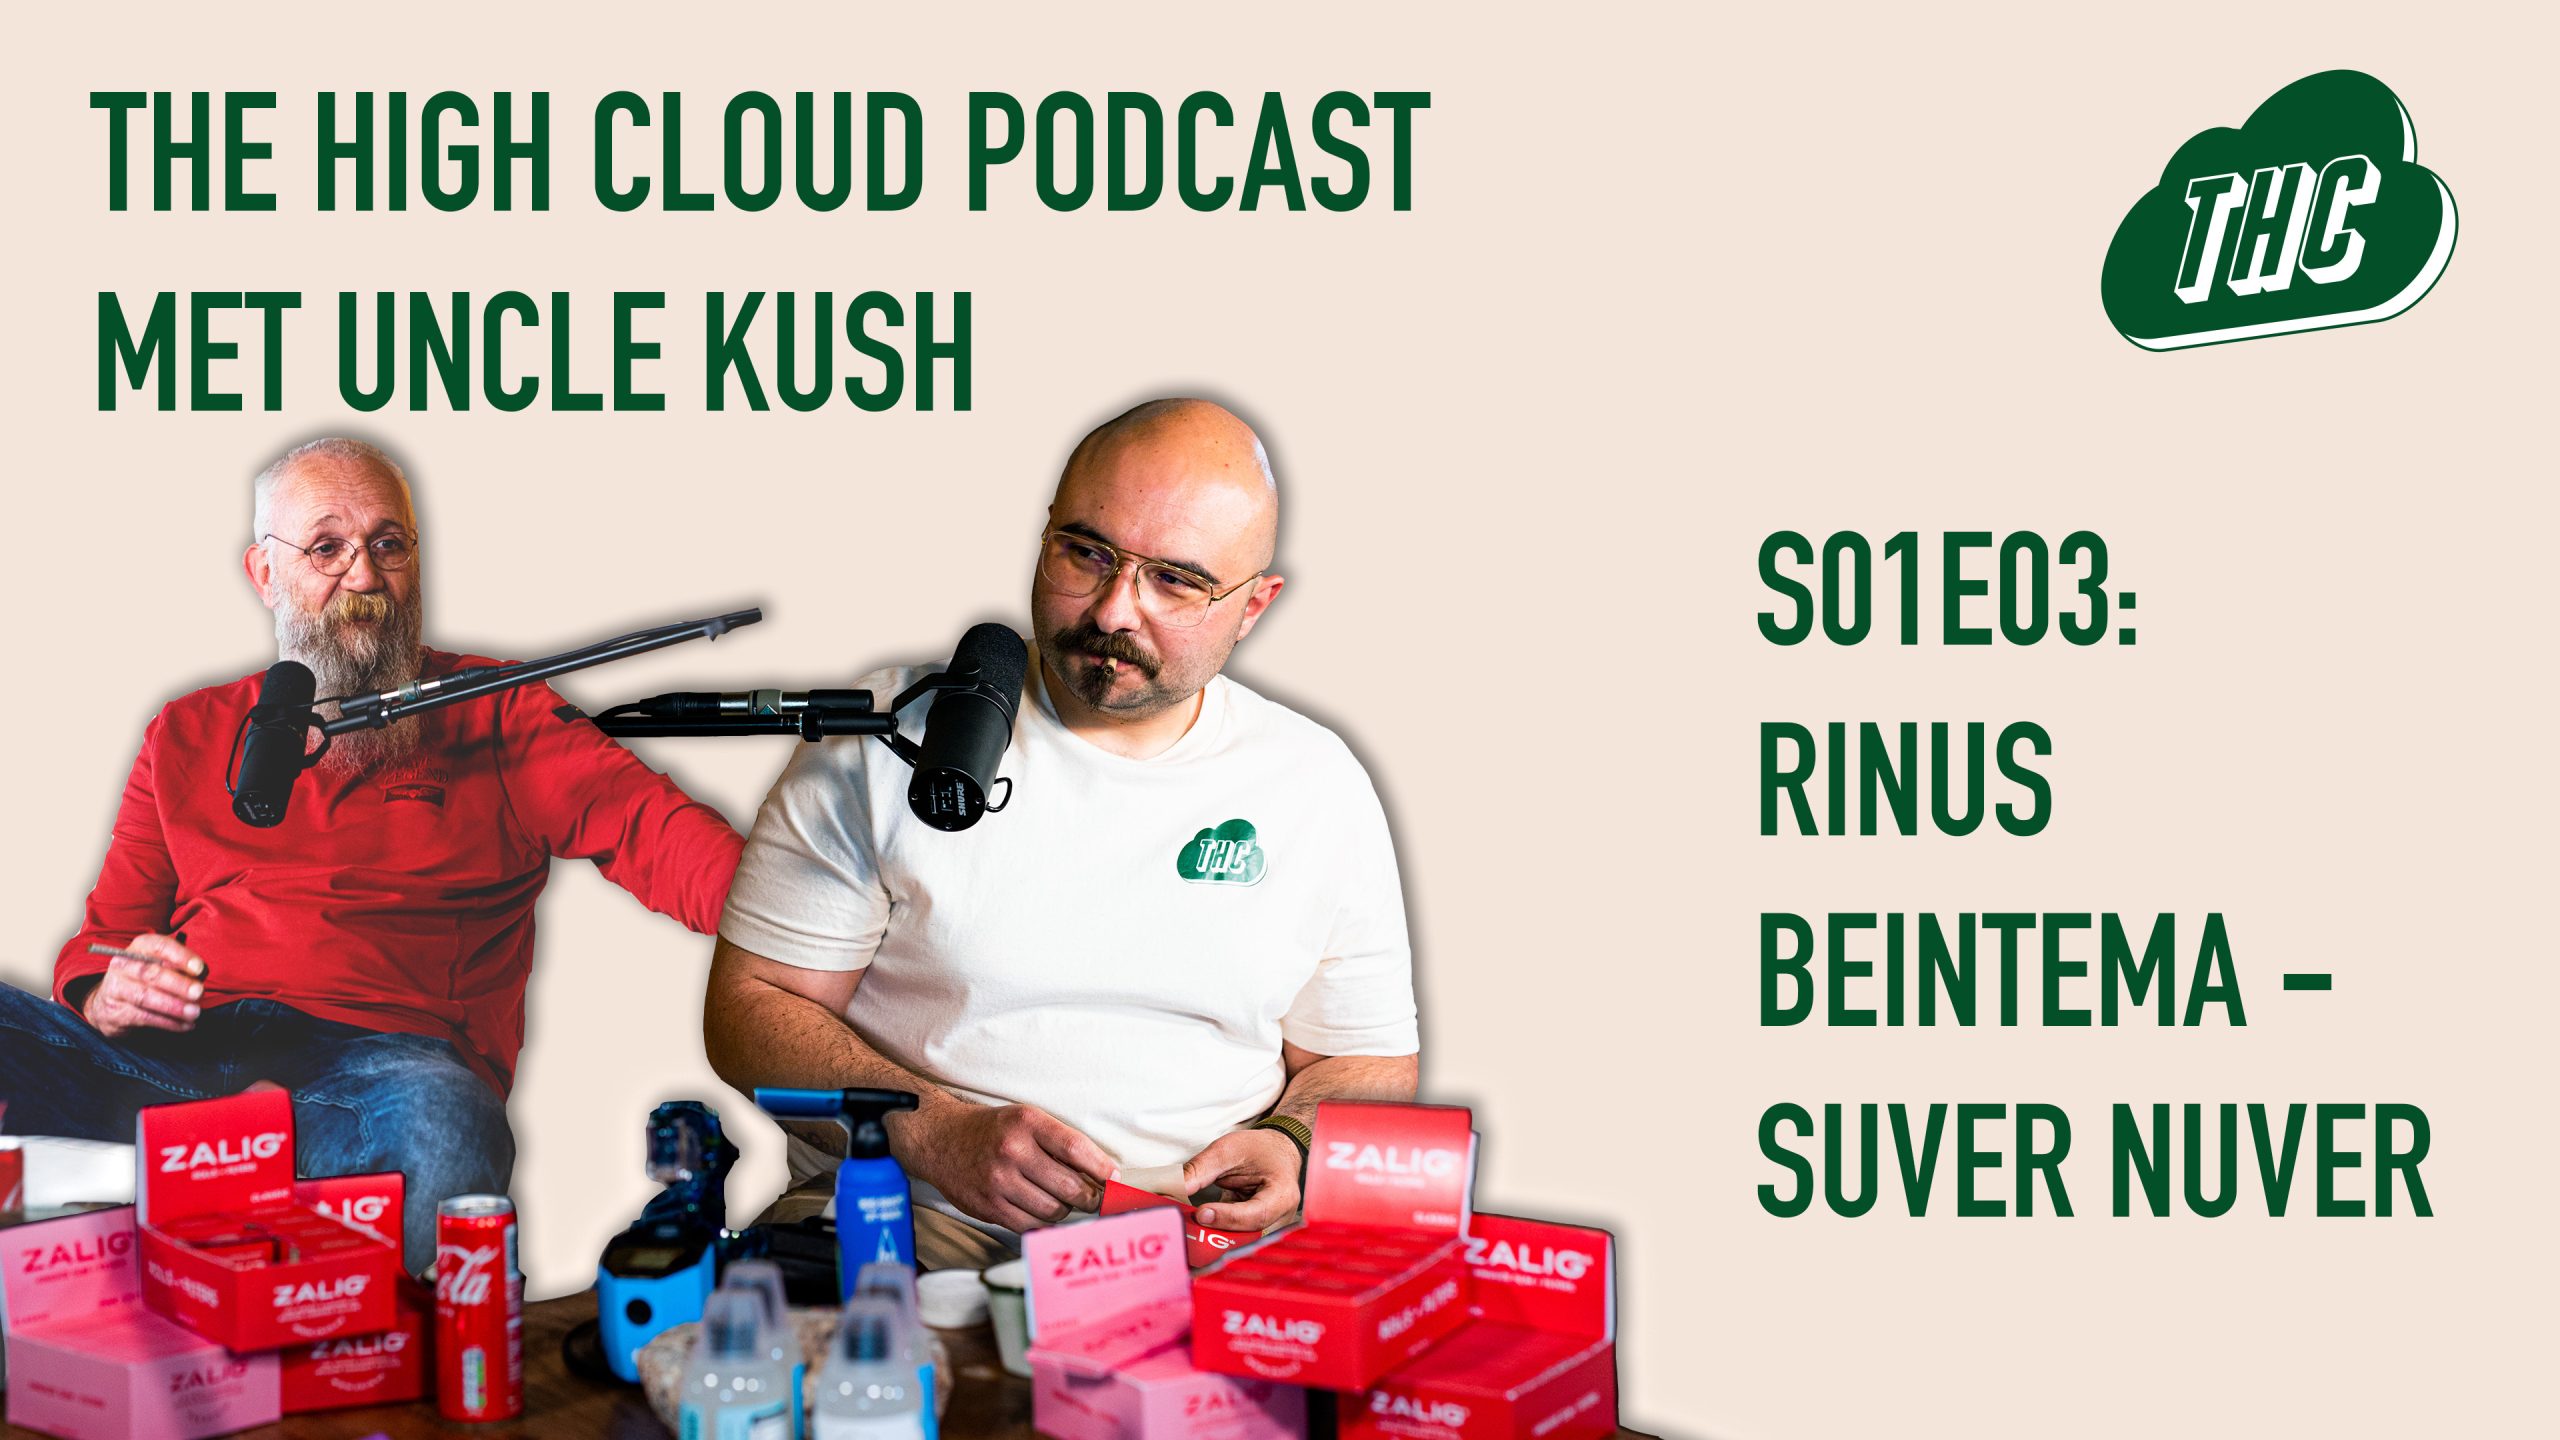 Rinus Beintema ‘Robin Hood van Cannabis’ in The High Cloud Podcast!